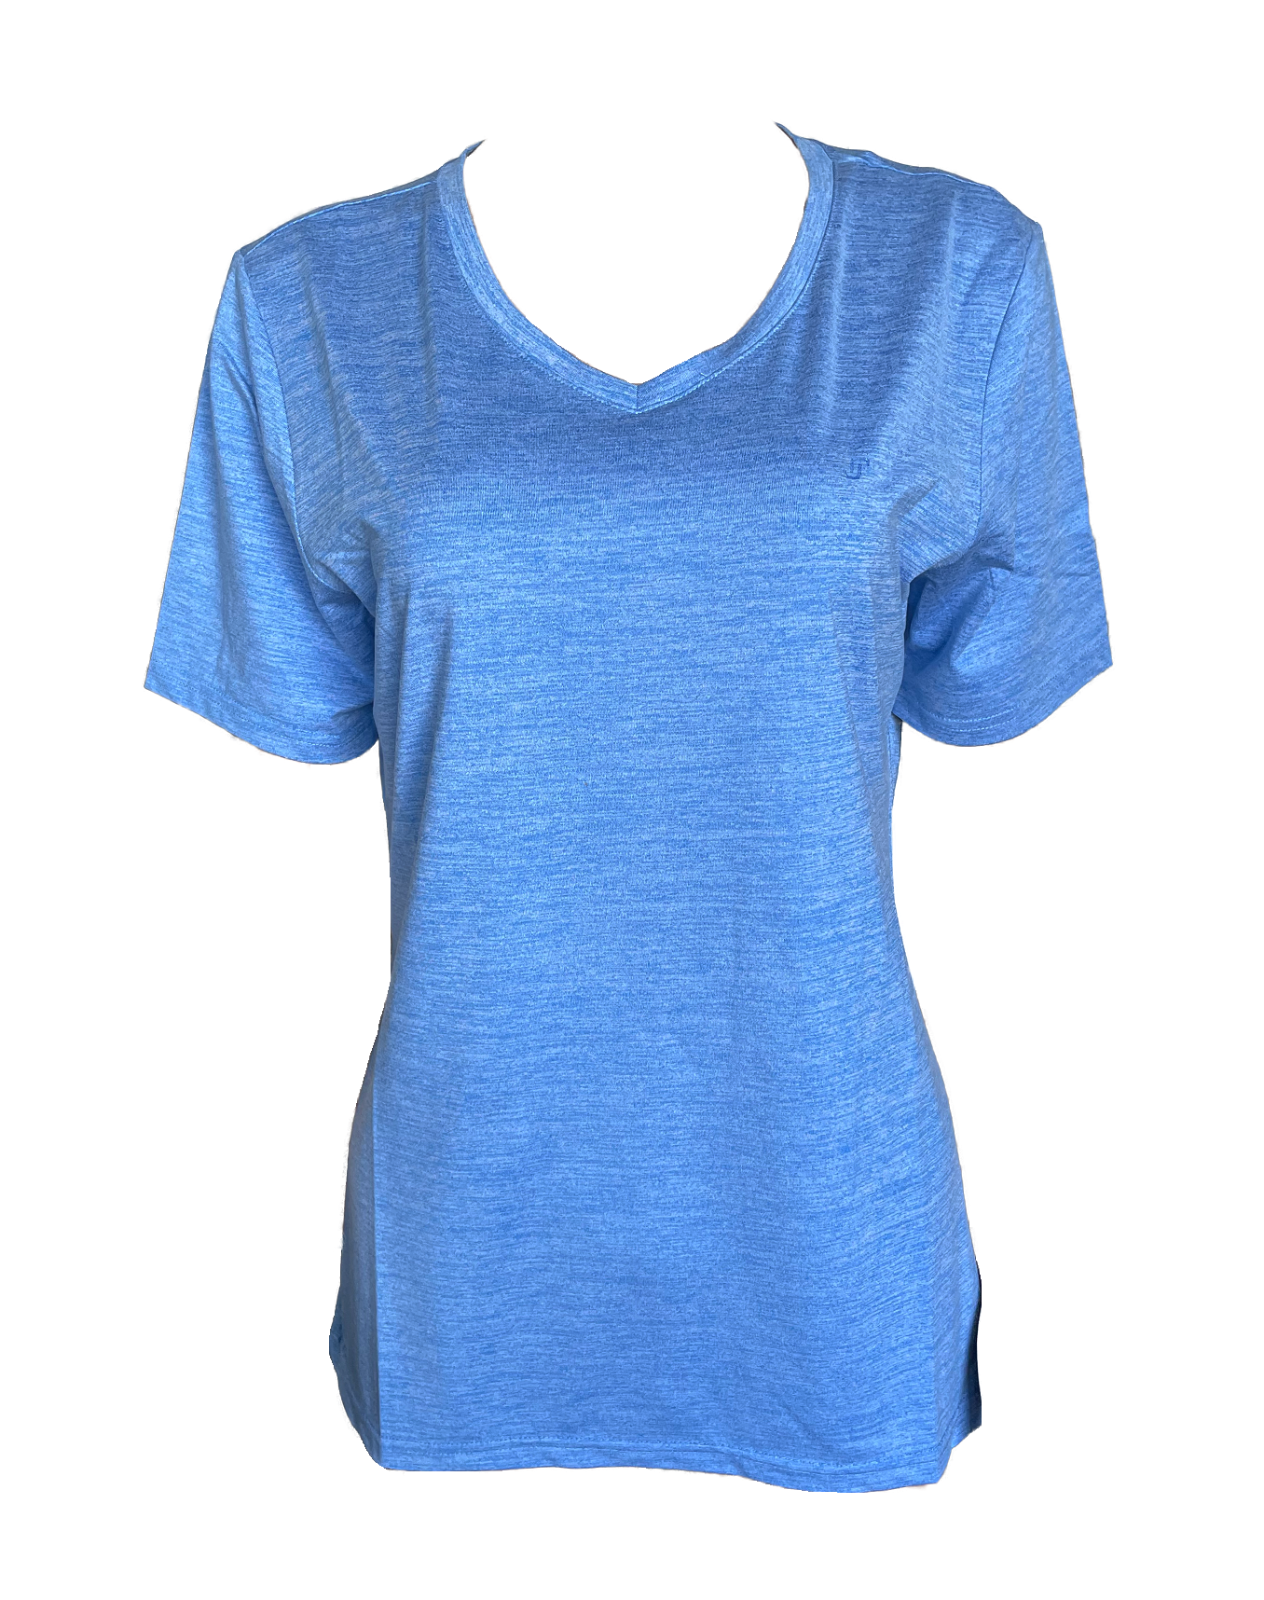 – Blau Grün Damen T-Shirt 40 JOY ZAMIRA Gr. Kurzarm 42 WWT-Handel 46 44 Sportshirt